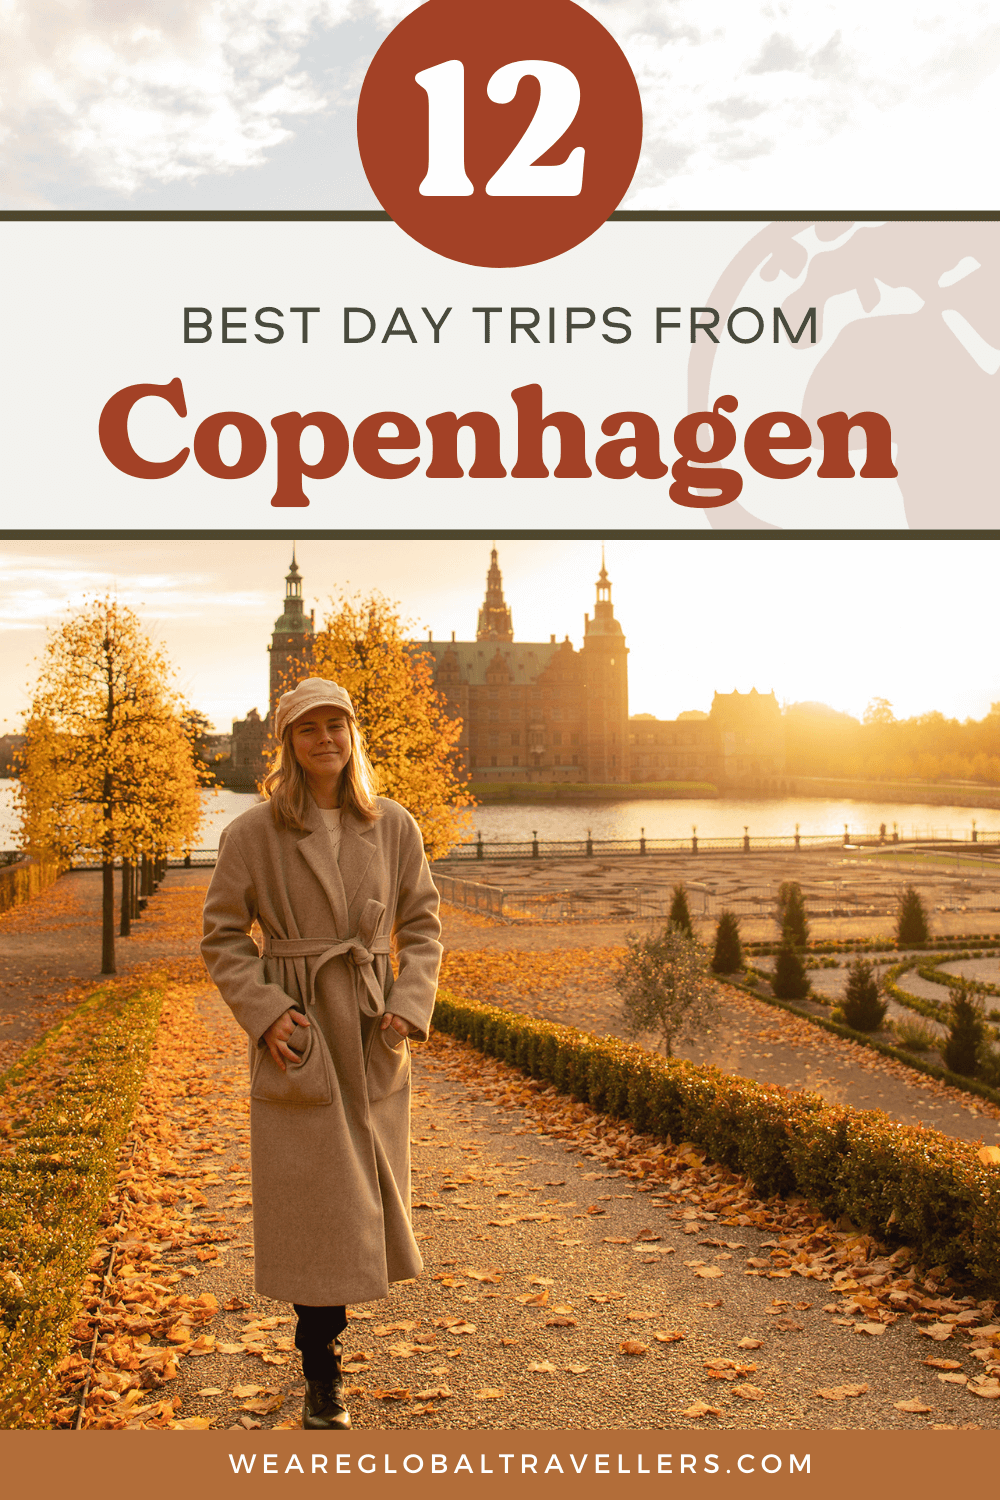 The best day trips from Copenhagen